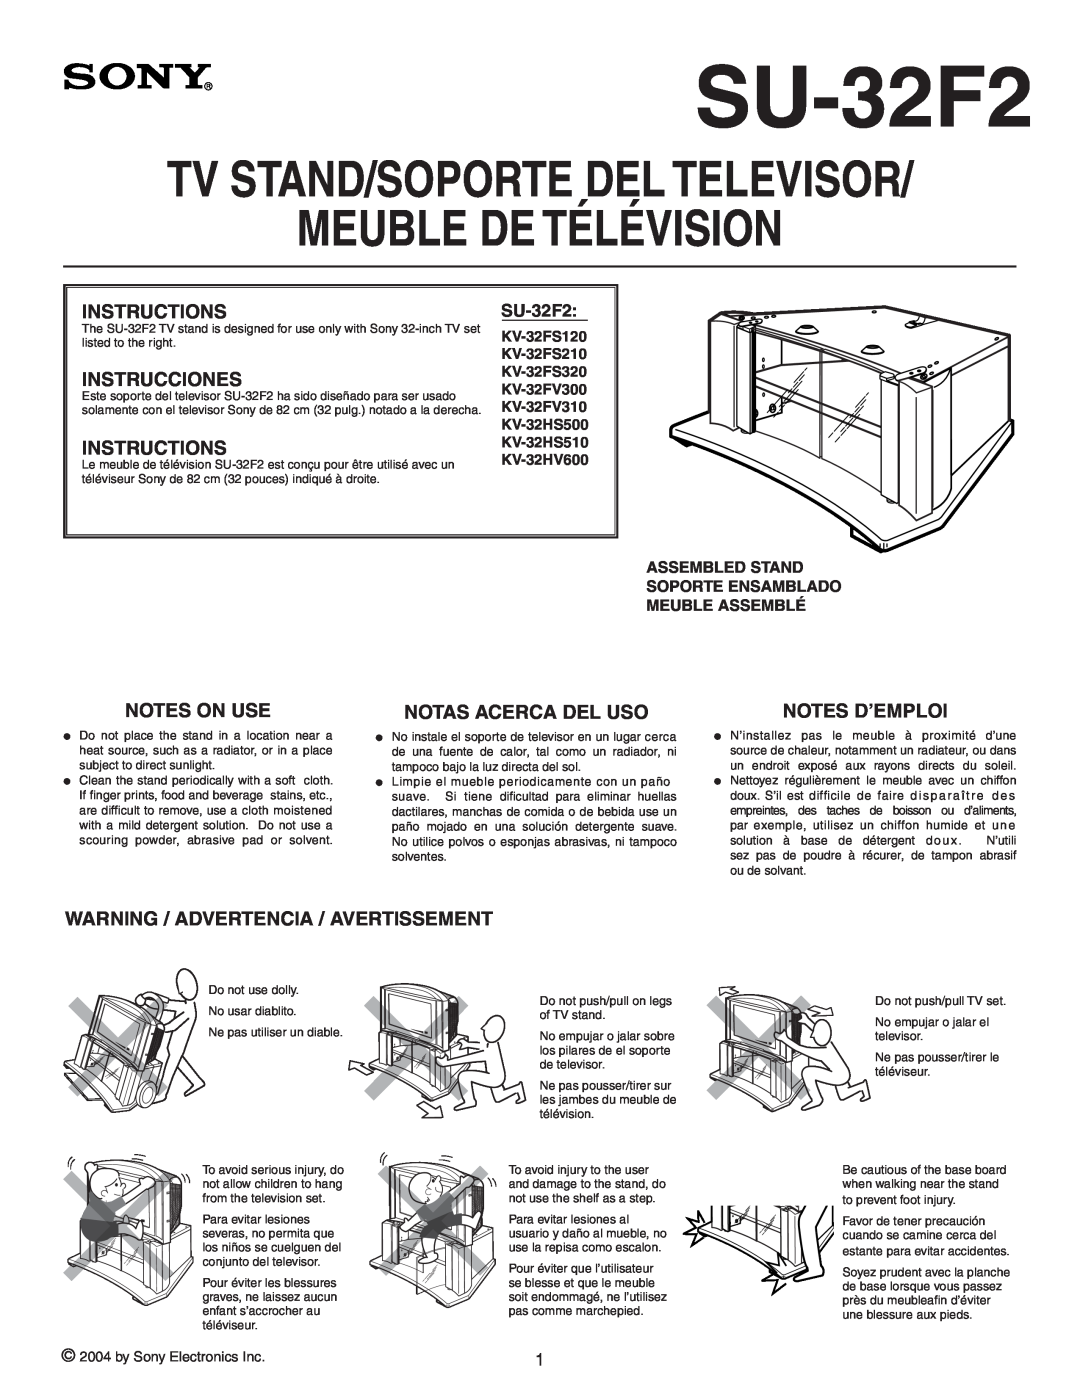 Sony SU-32F2 manual Meuble De Télévision, Tv Stand/Soporte Del Televisor, Instructions, Instrucciones, Notes On Use 